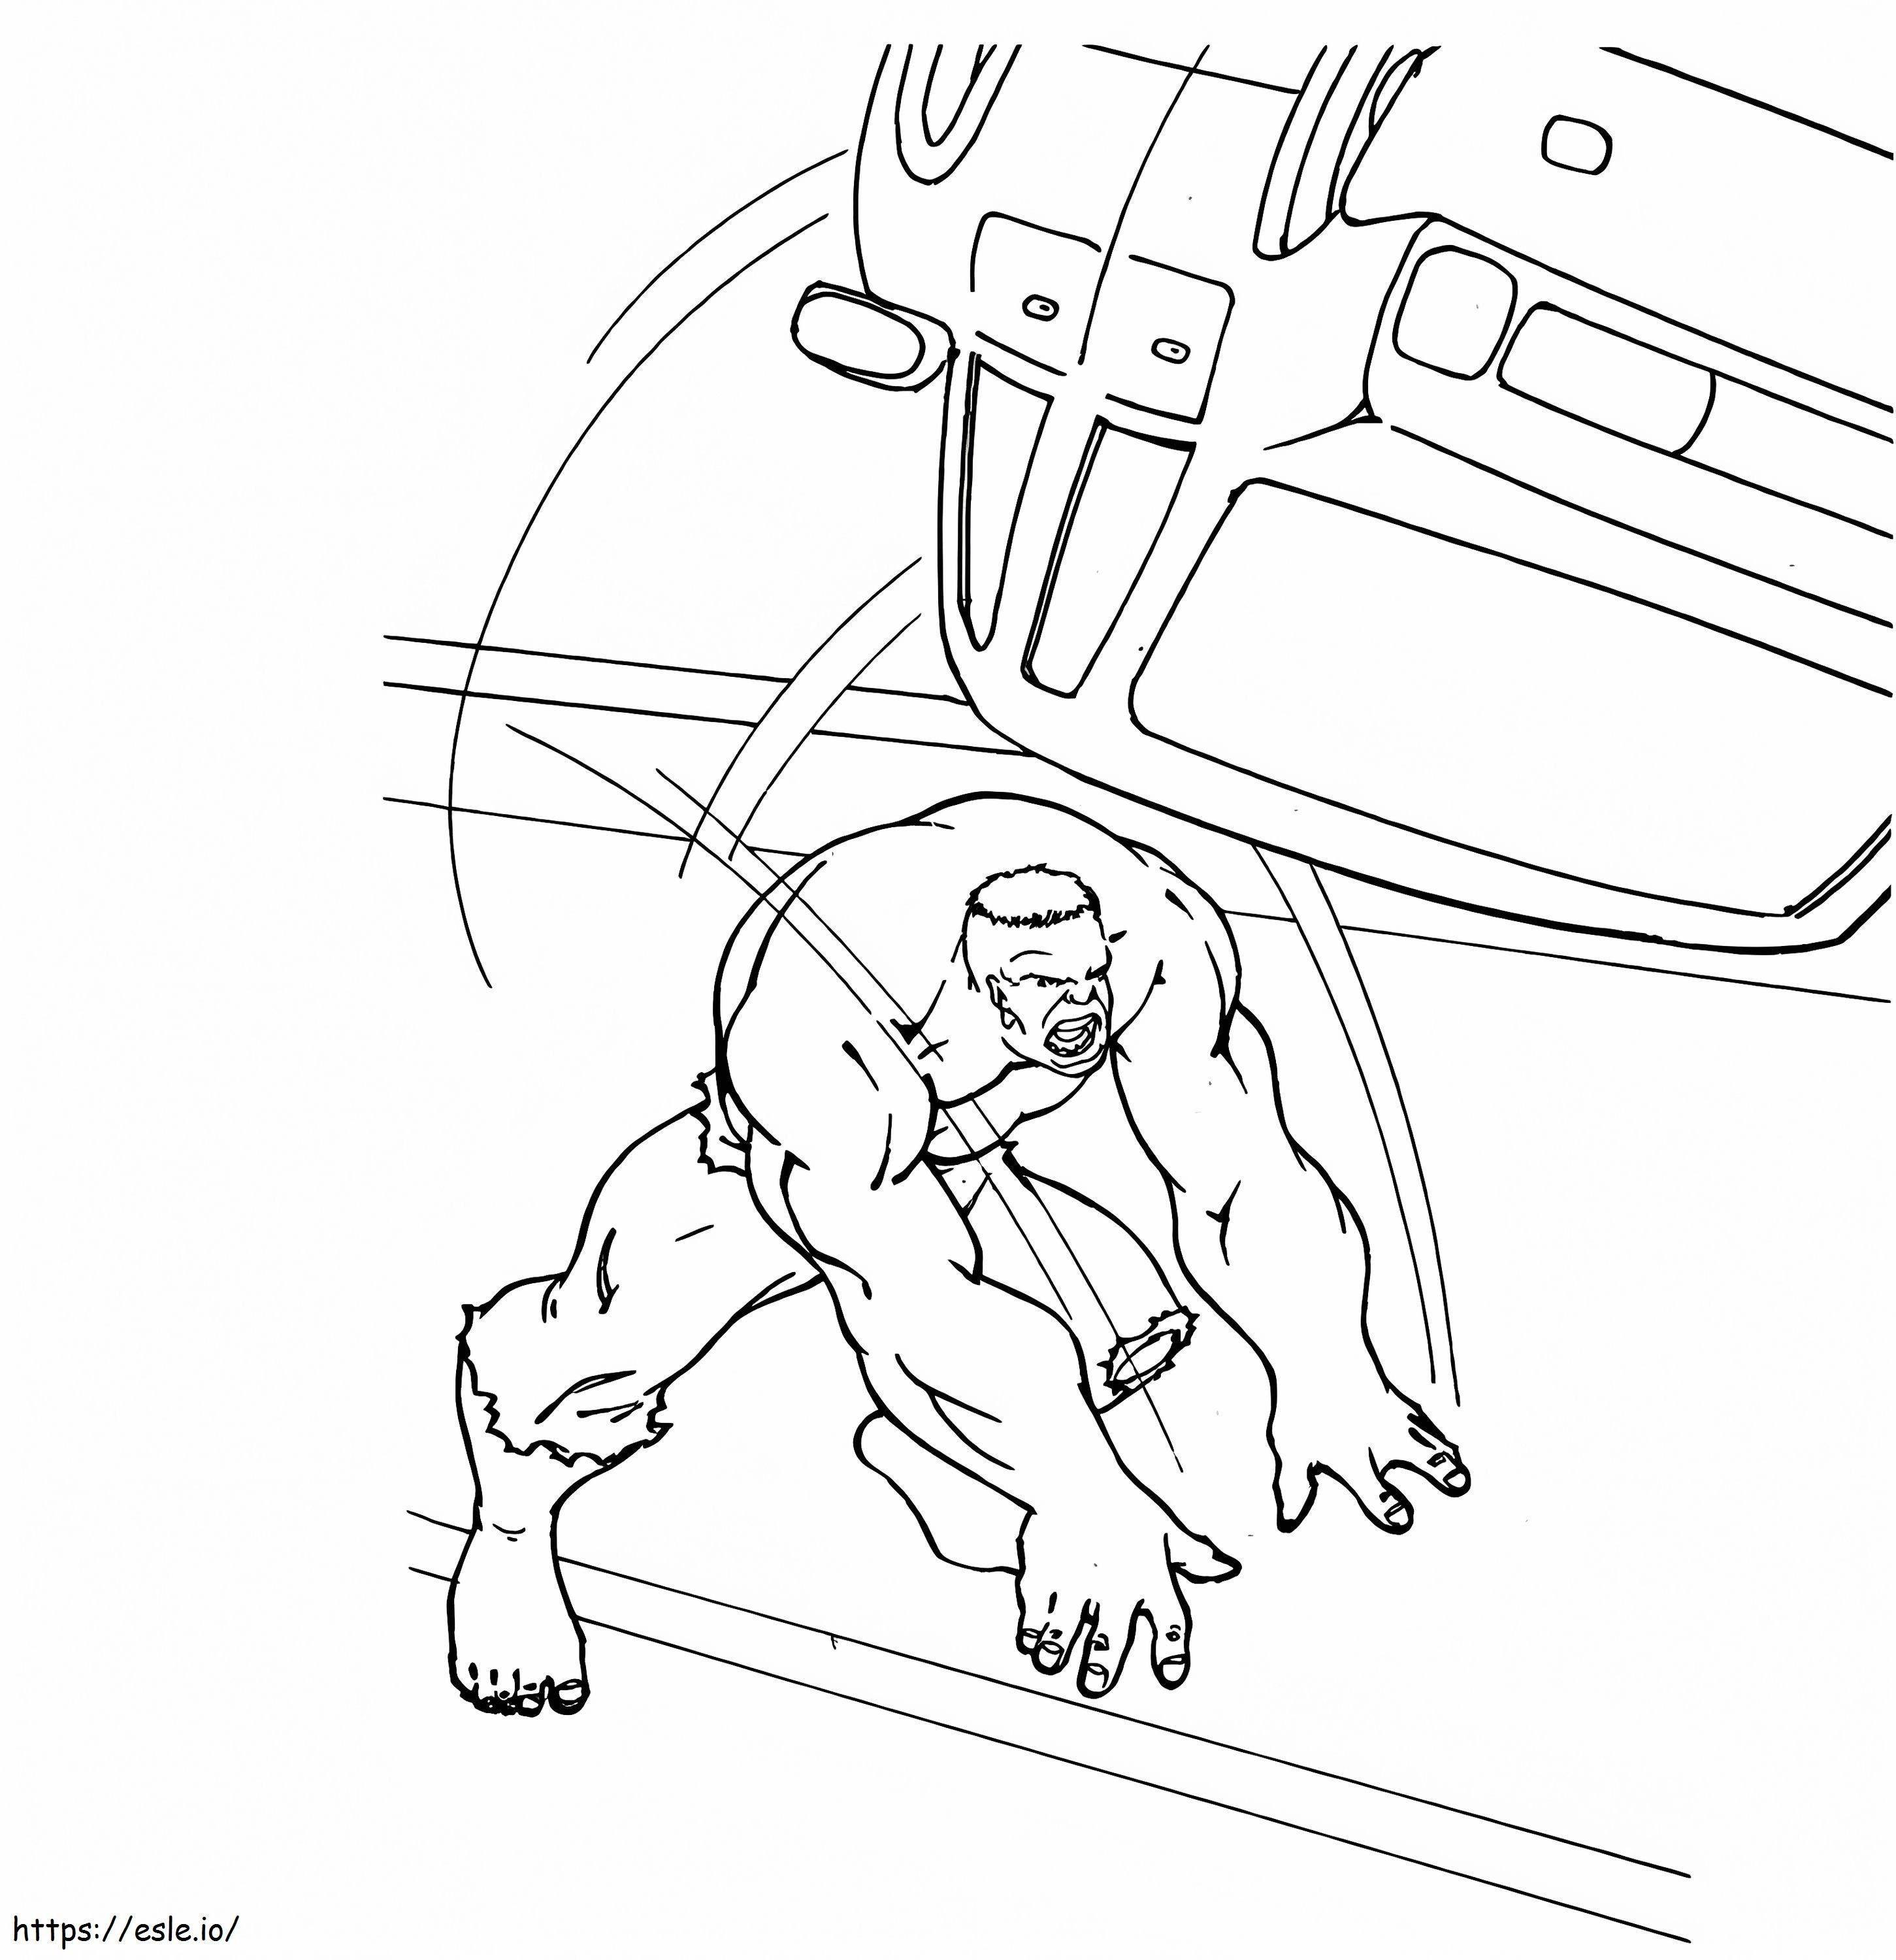 1562292687_Hulk jogando carro A4 para colorir